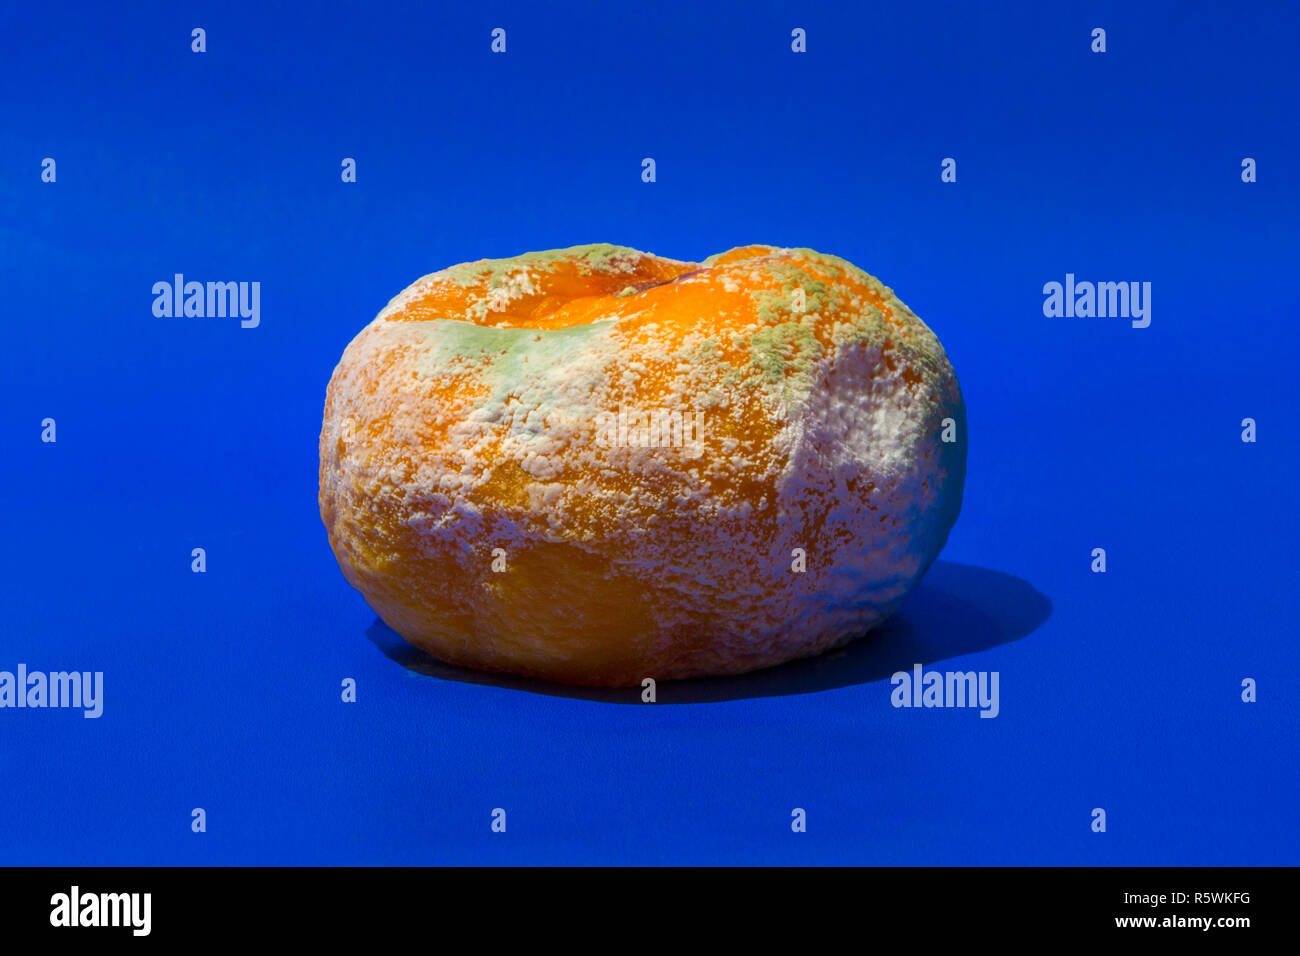 Mouldy, rotten fruit - an orange. Stock Photo